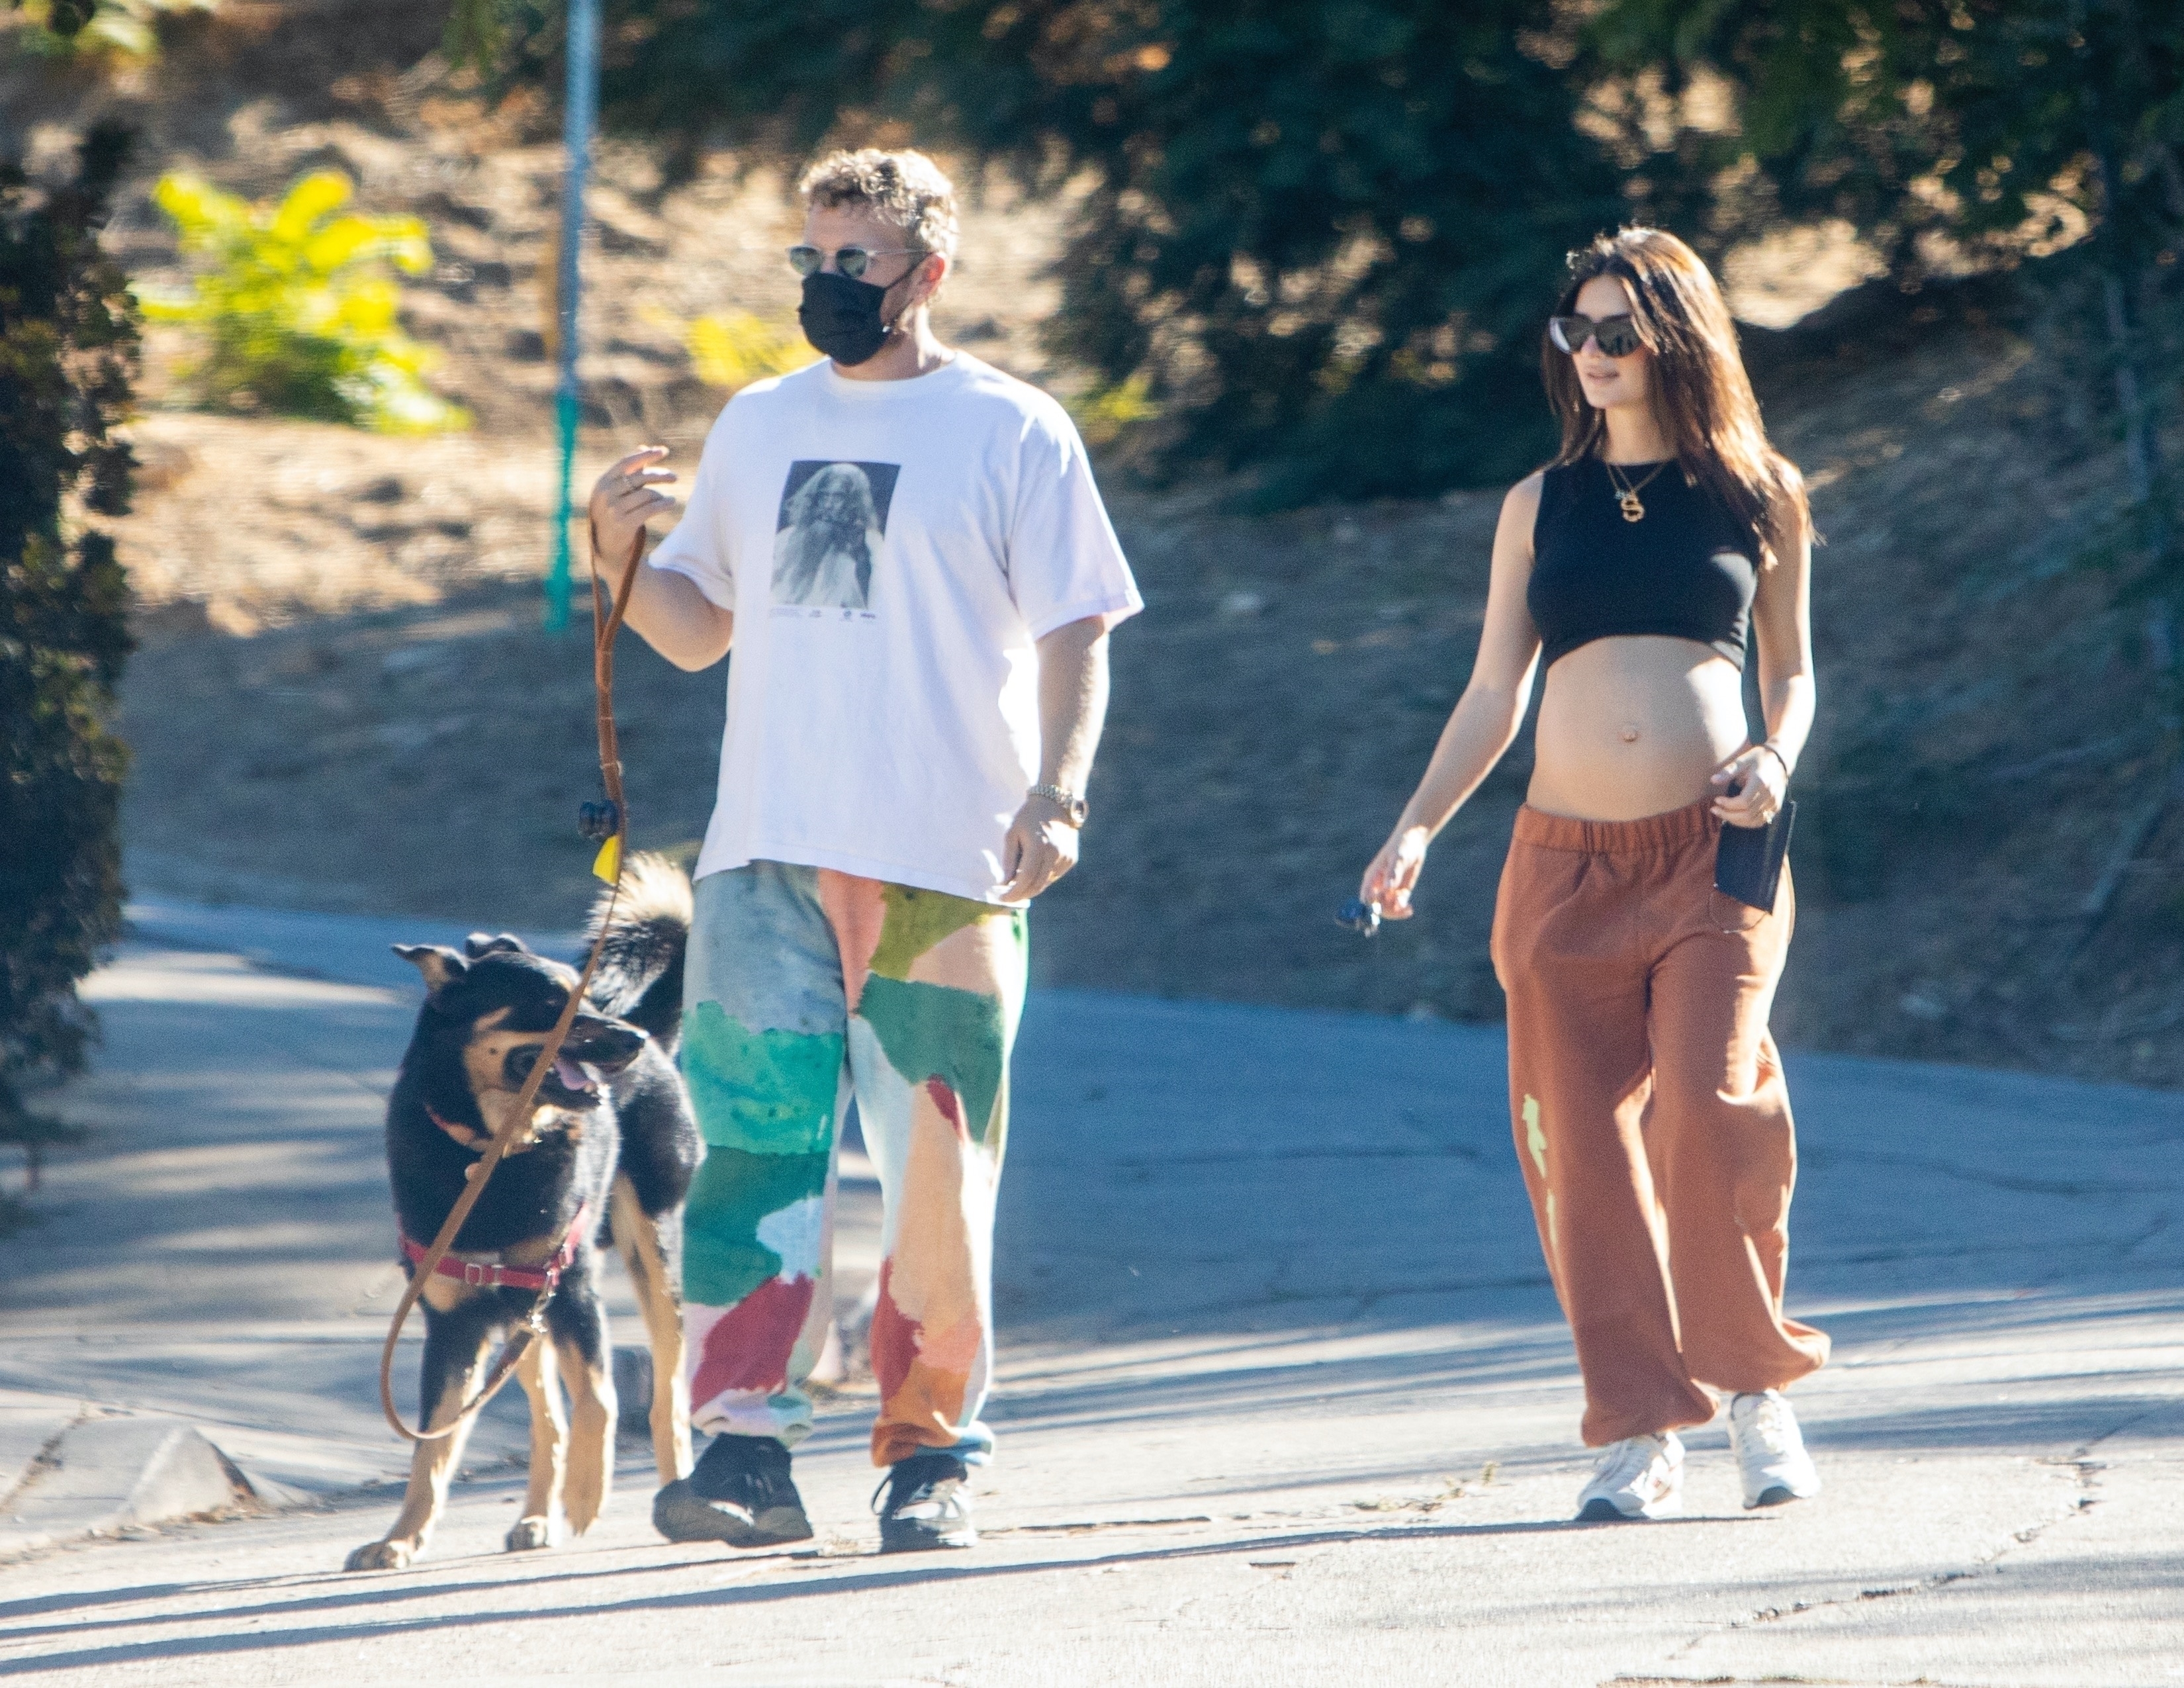 File photo: Emily Ratajkowski, pregnant, and her husband Sebastian Bear-McClard take their dog for a walk in Los Angeles on November 15, 2020 (Backgrid/The Grosby Group)